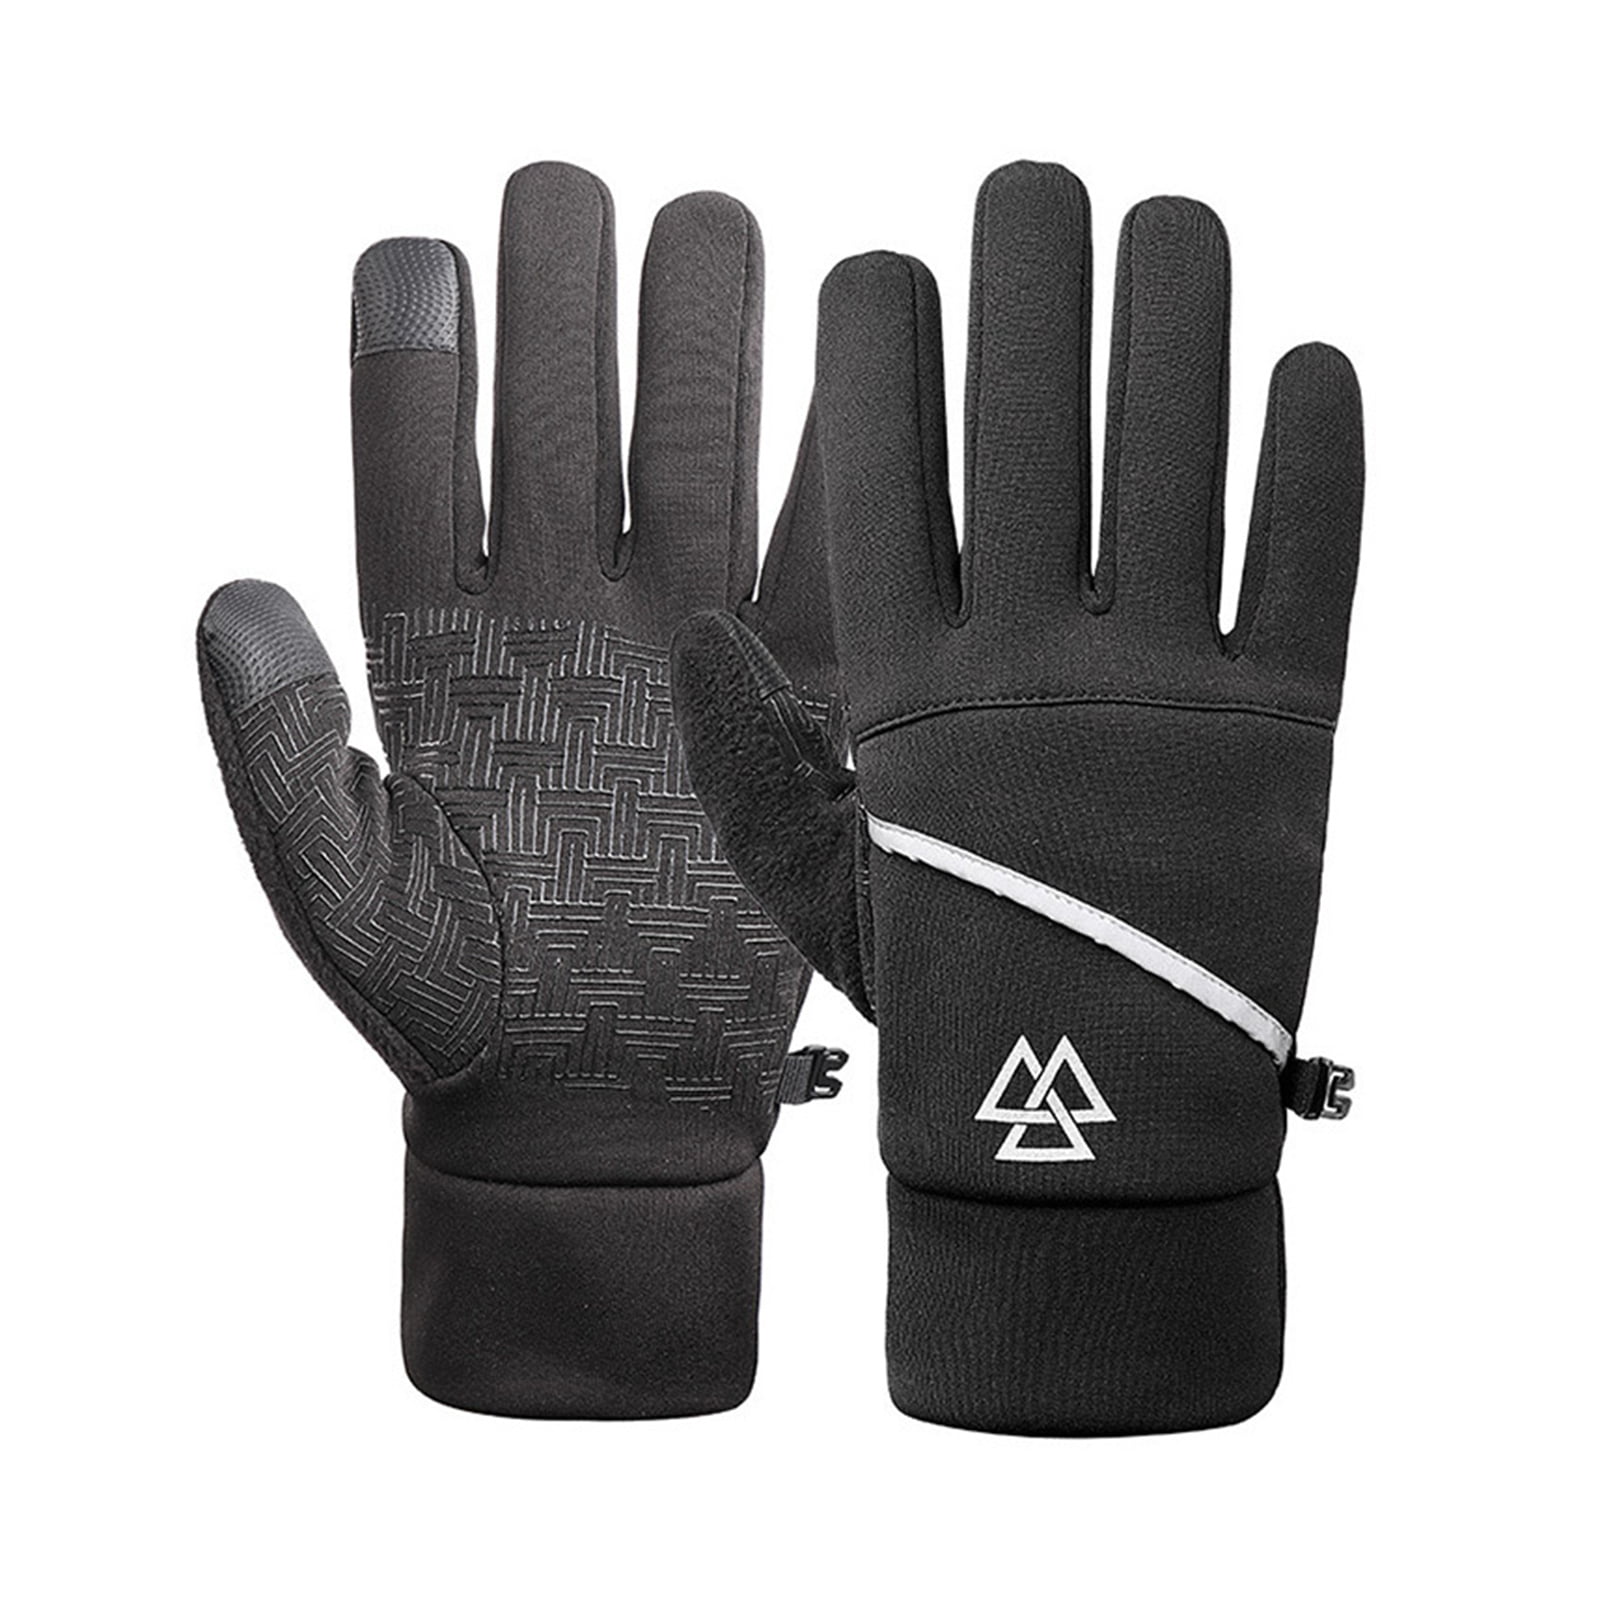 Karrimor Fleece Gloves Premium Mens Silicone Palm Black Brand New Genuine